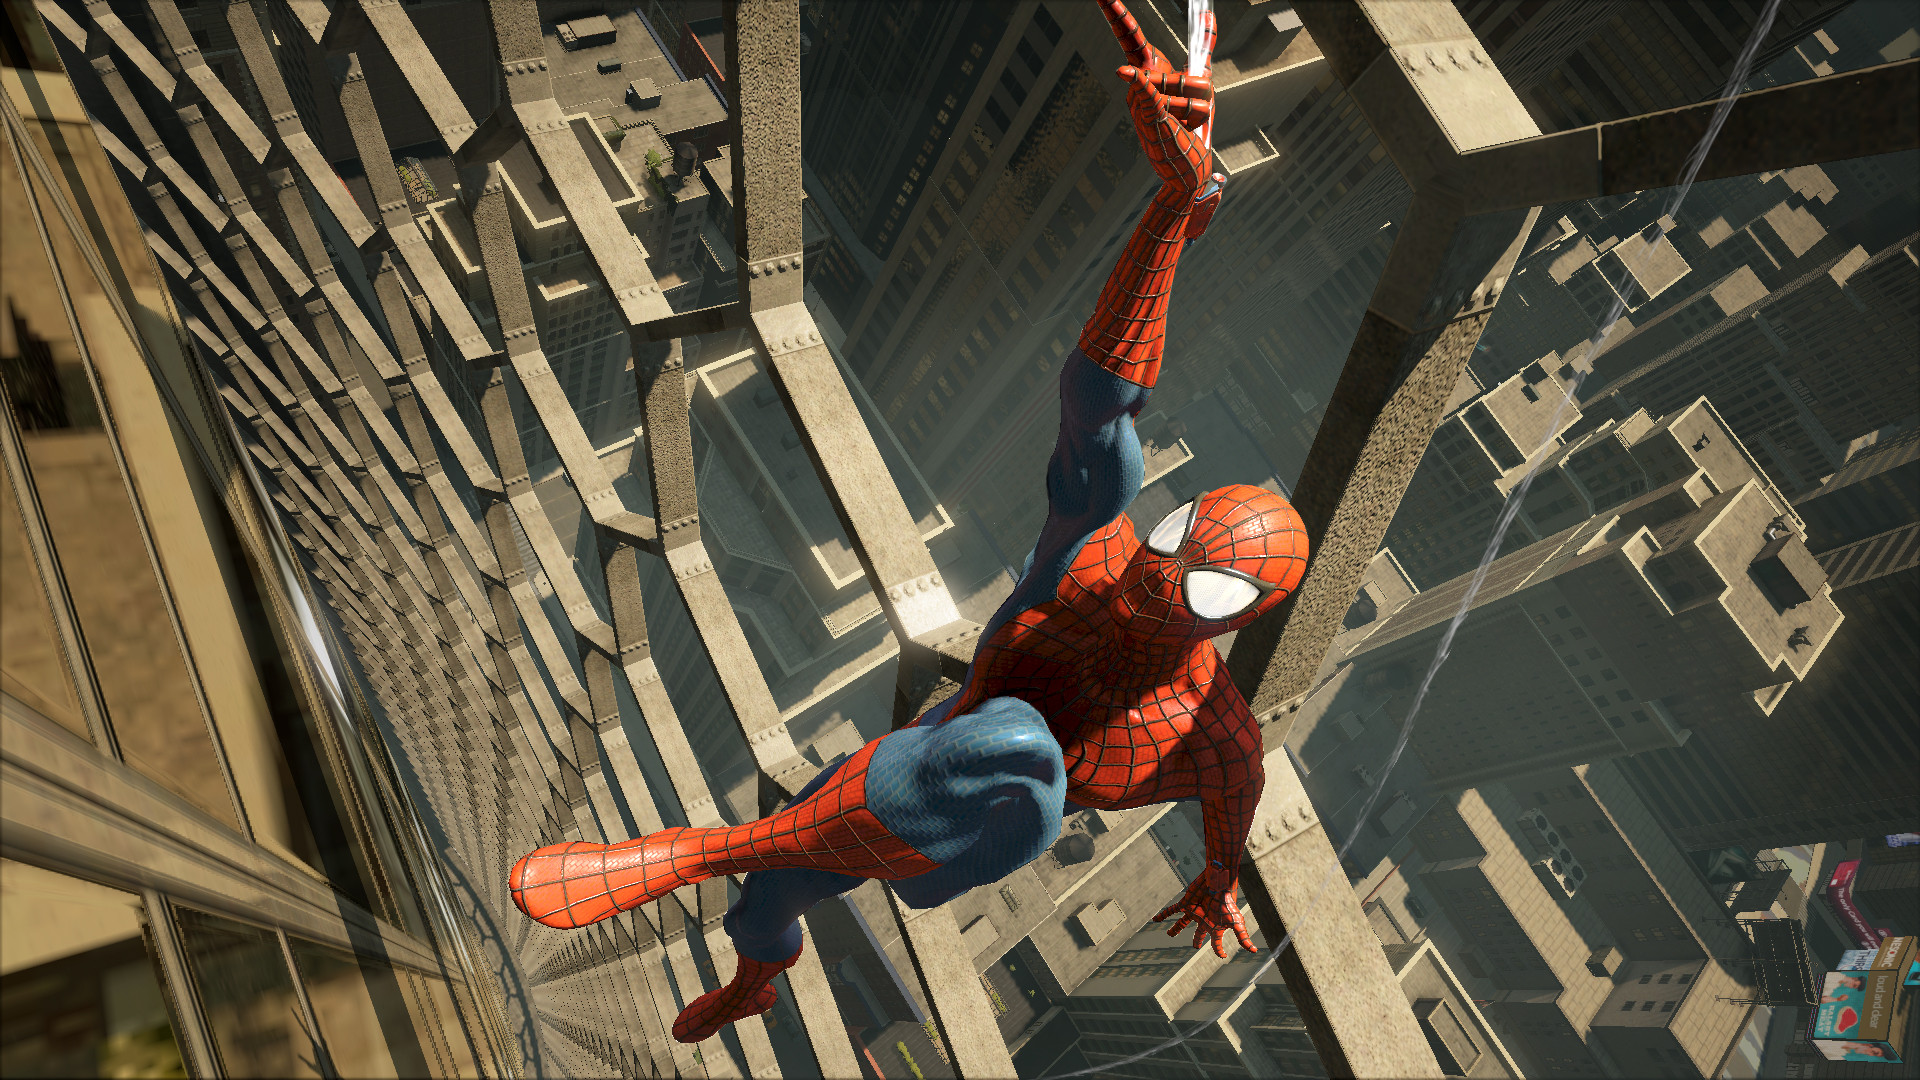 Человек паук в школе. Spider man 2014 игра. The amazing Spider-man 2 (игра, 2014). Человек паук Амейзинг 2. Амазинг человек паук 2.